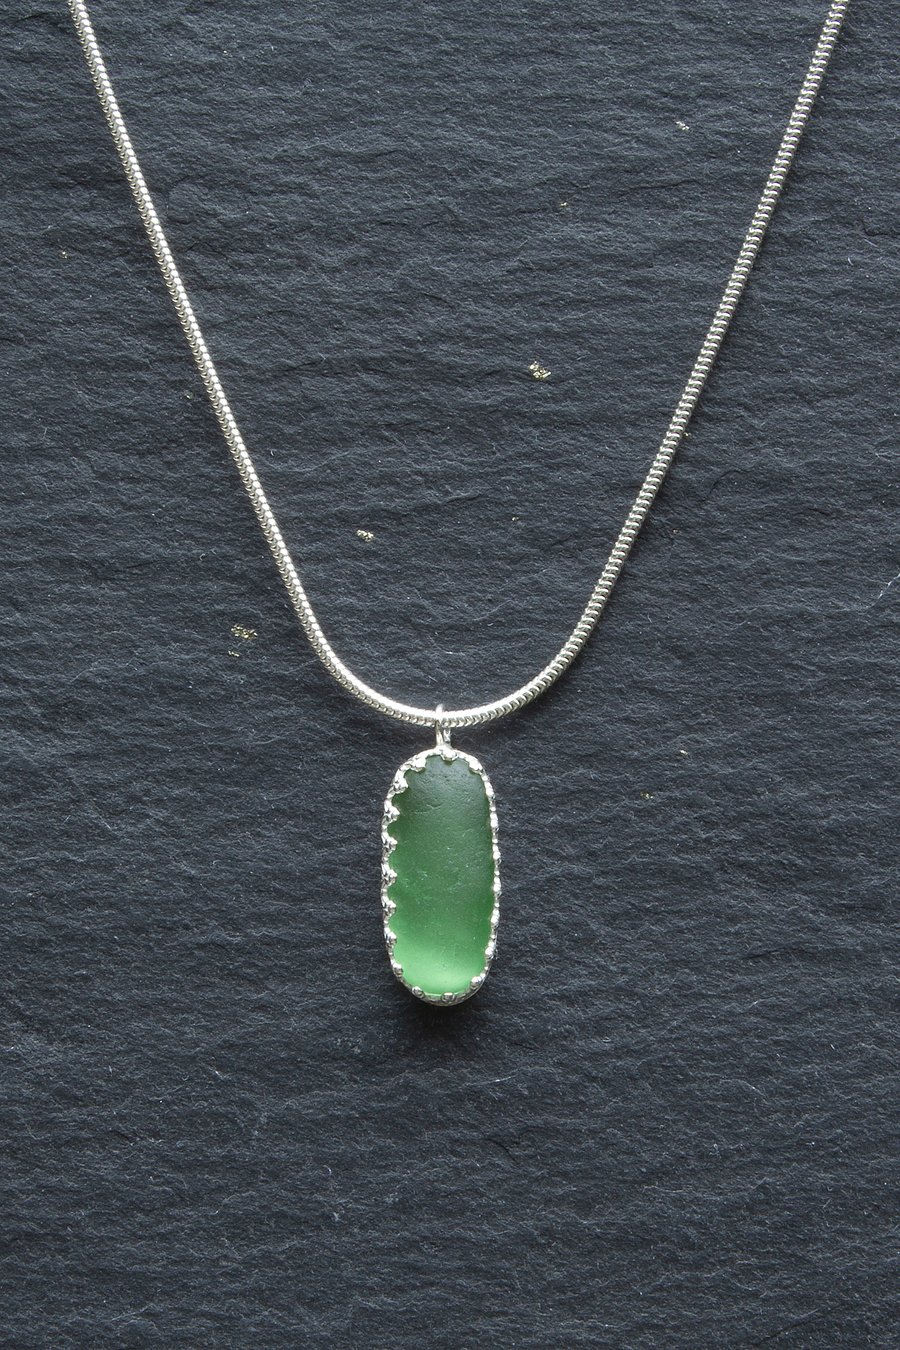 Sea glass pendant - pale green